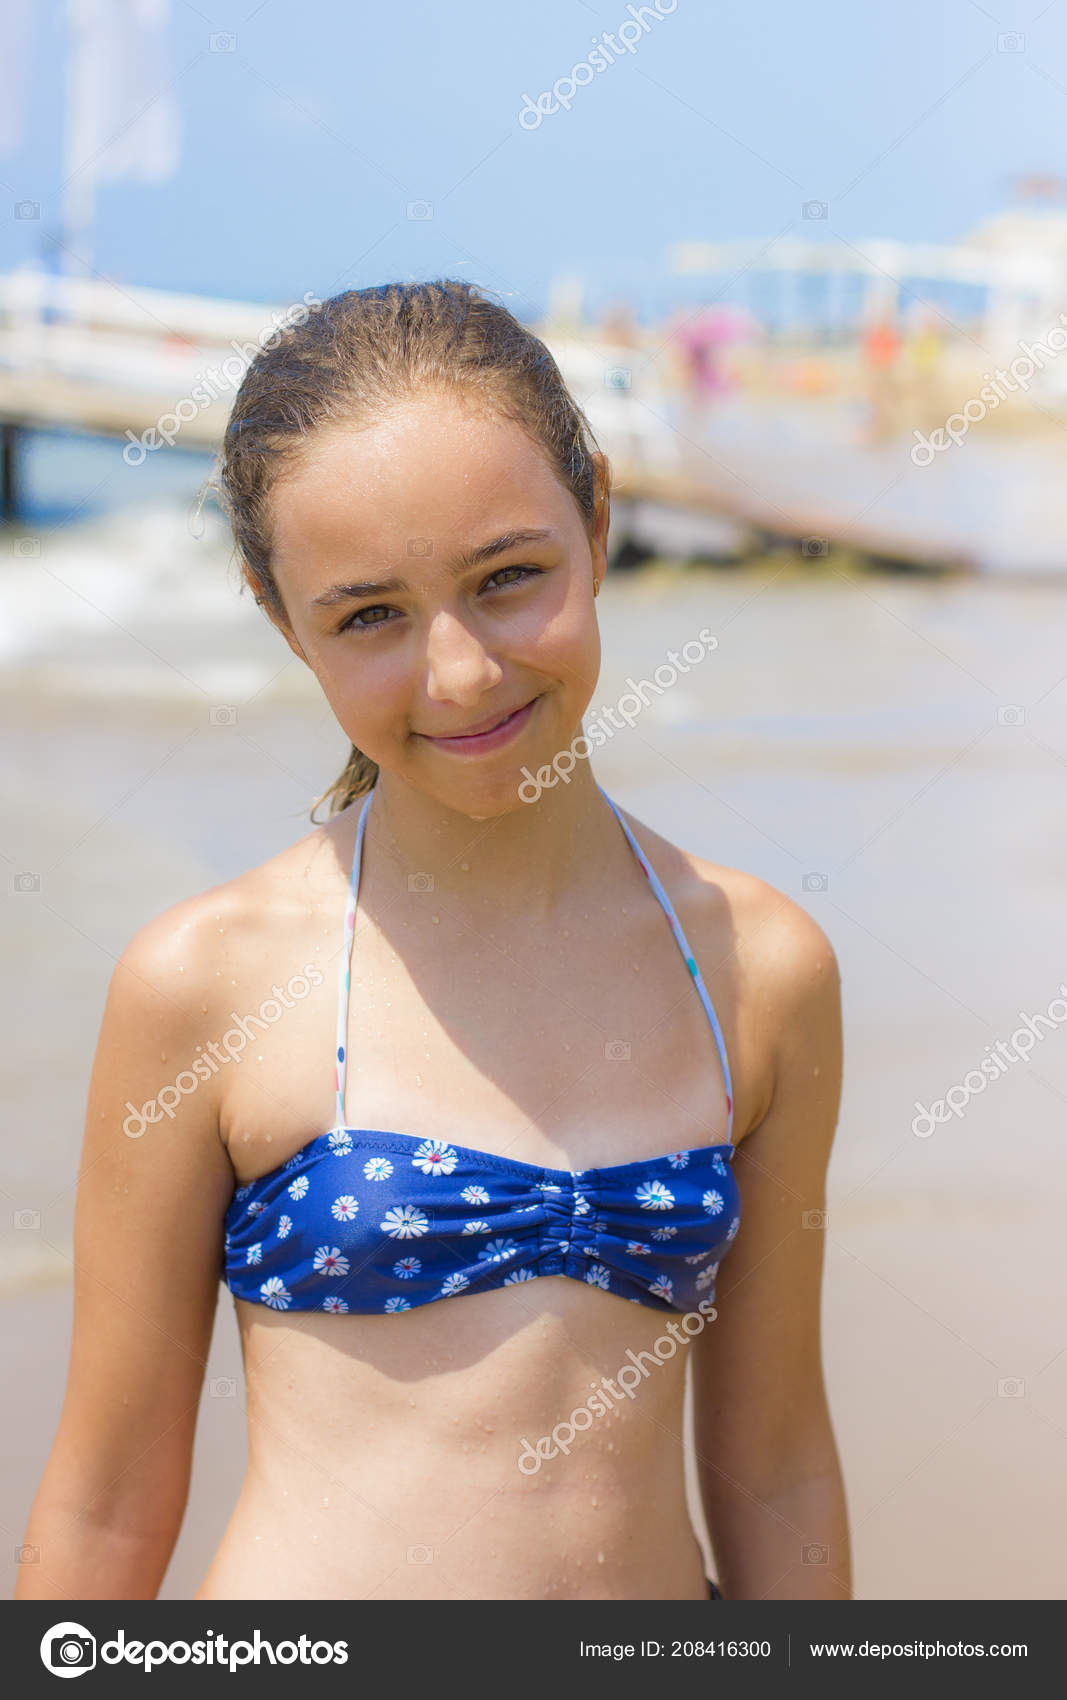 superávit doblado motivo Adolescente bikini fotos de stock, imágenes de Adolescente bikini sin  royalties | Depositphotos